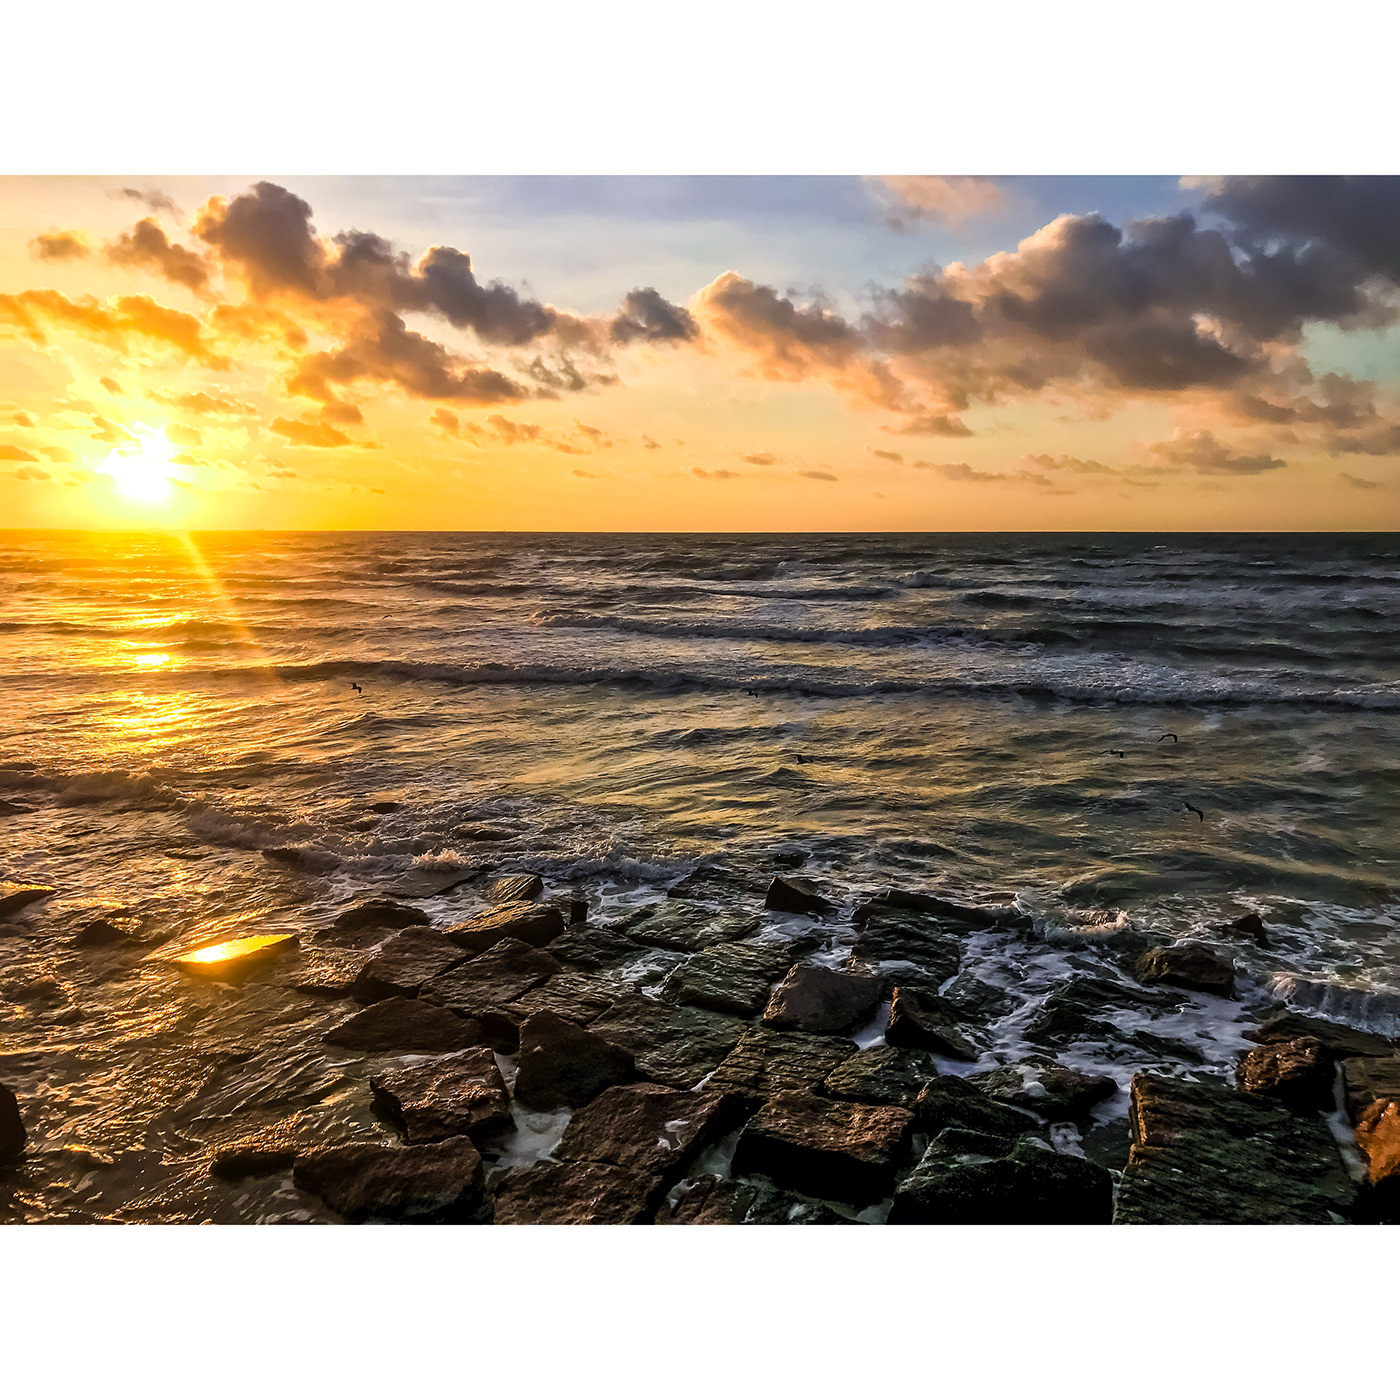 Sunrise sunset Texas beaches Surf hurricane Gulf of Mexico Galveston Island  seagulls pelicans art pleasure pier waves sand Sun Seashells tide Photography 